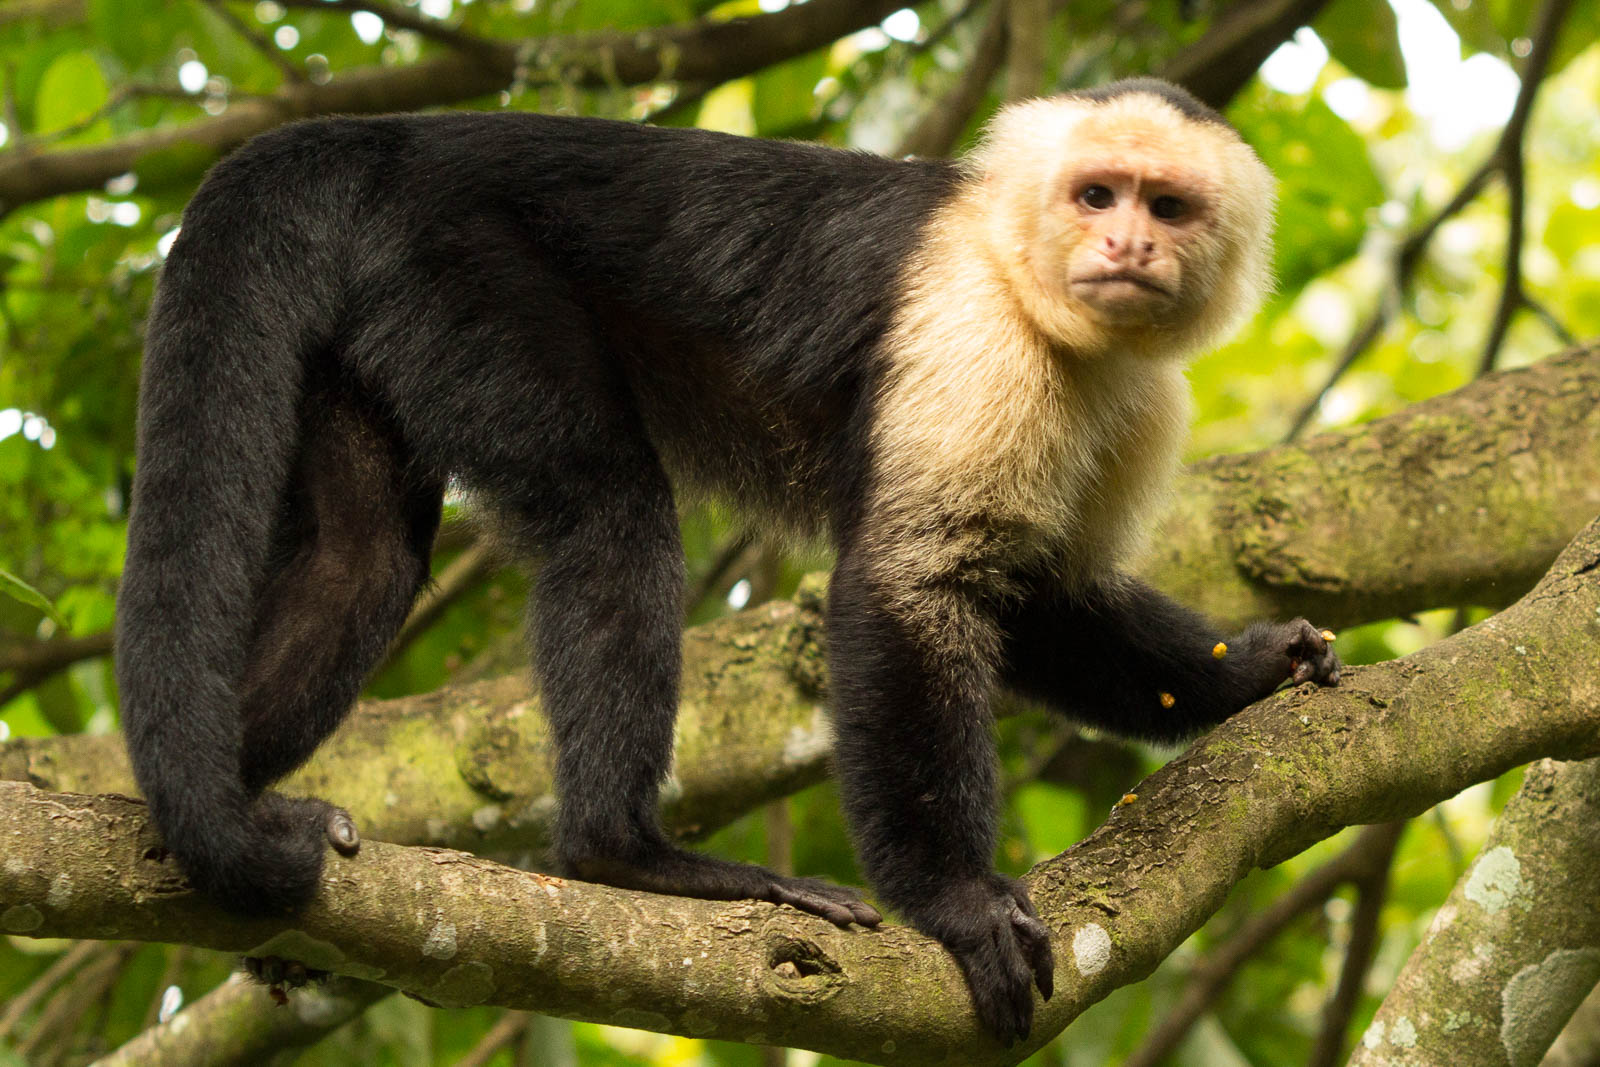 White faced capuchin monkeys